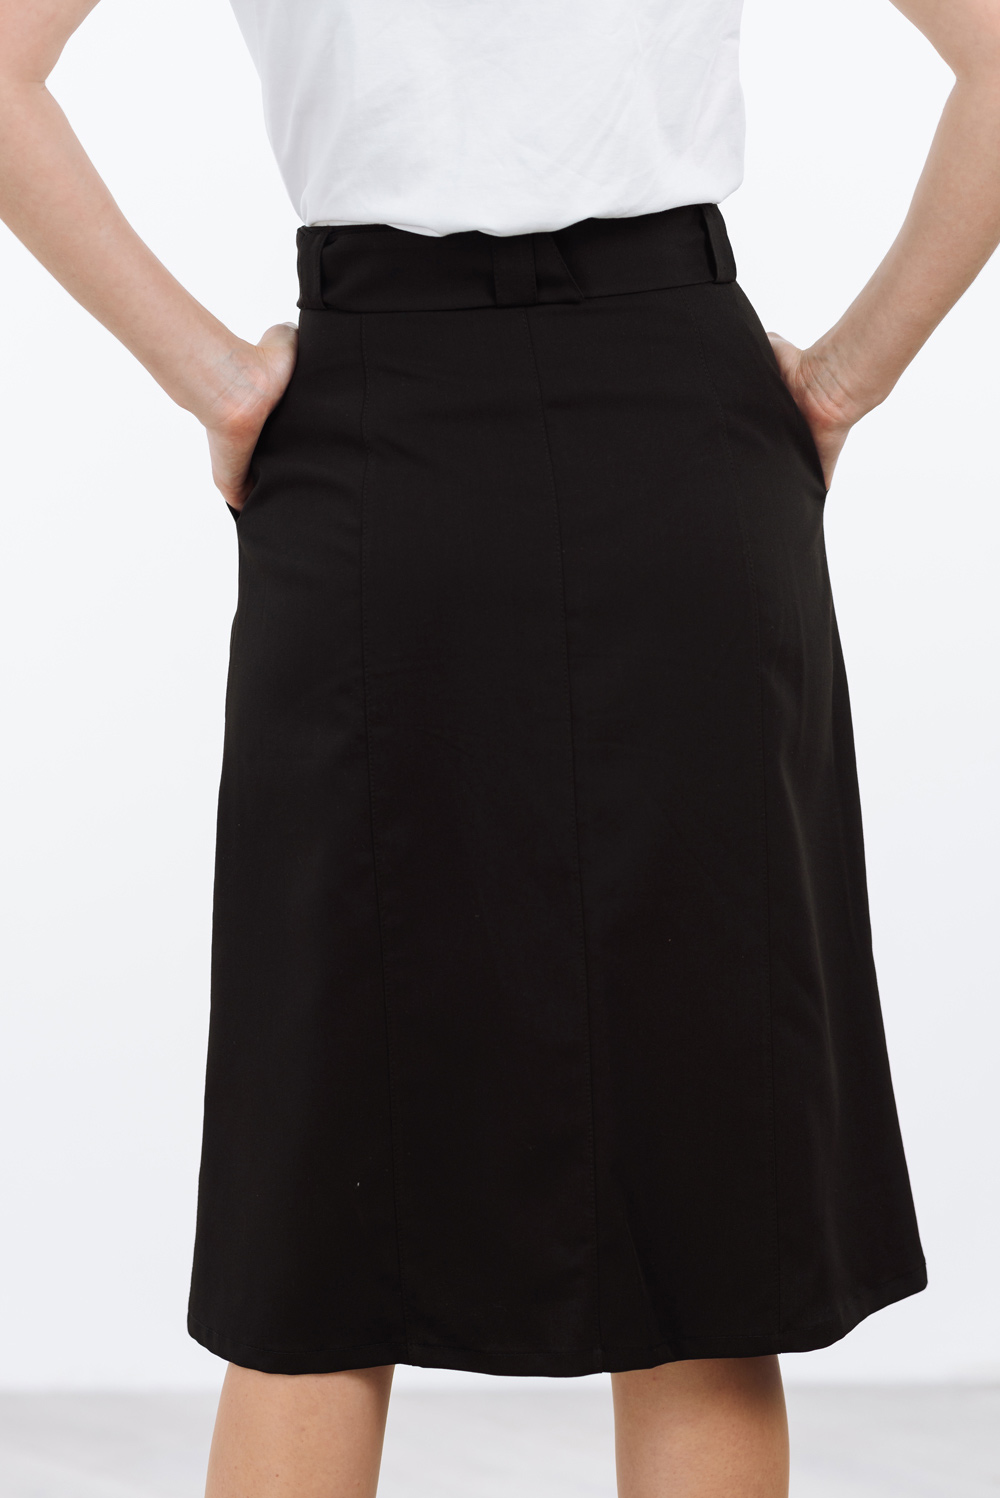 Black A-line skirt with belt